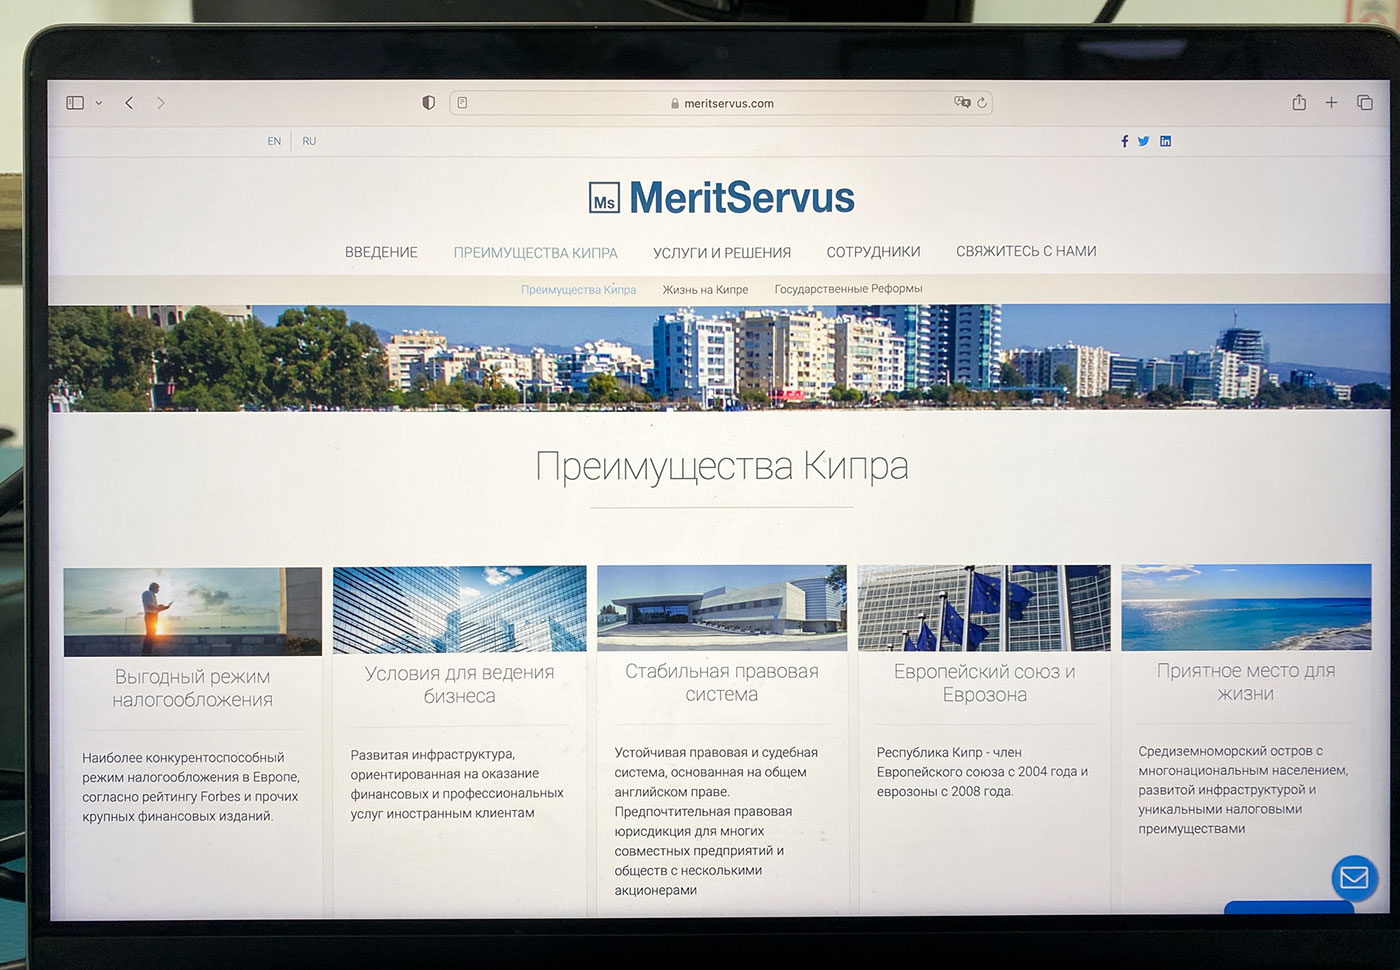 A screenshot from MeritServus’s website